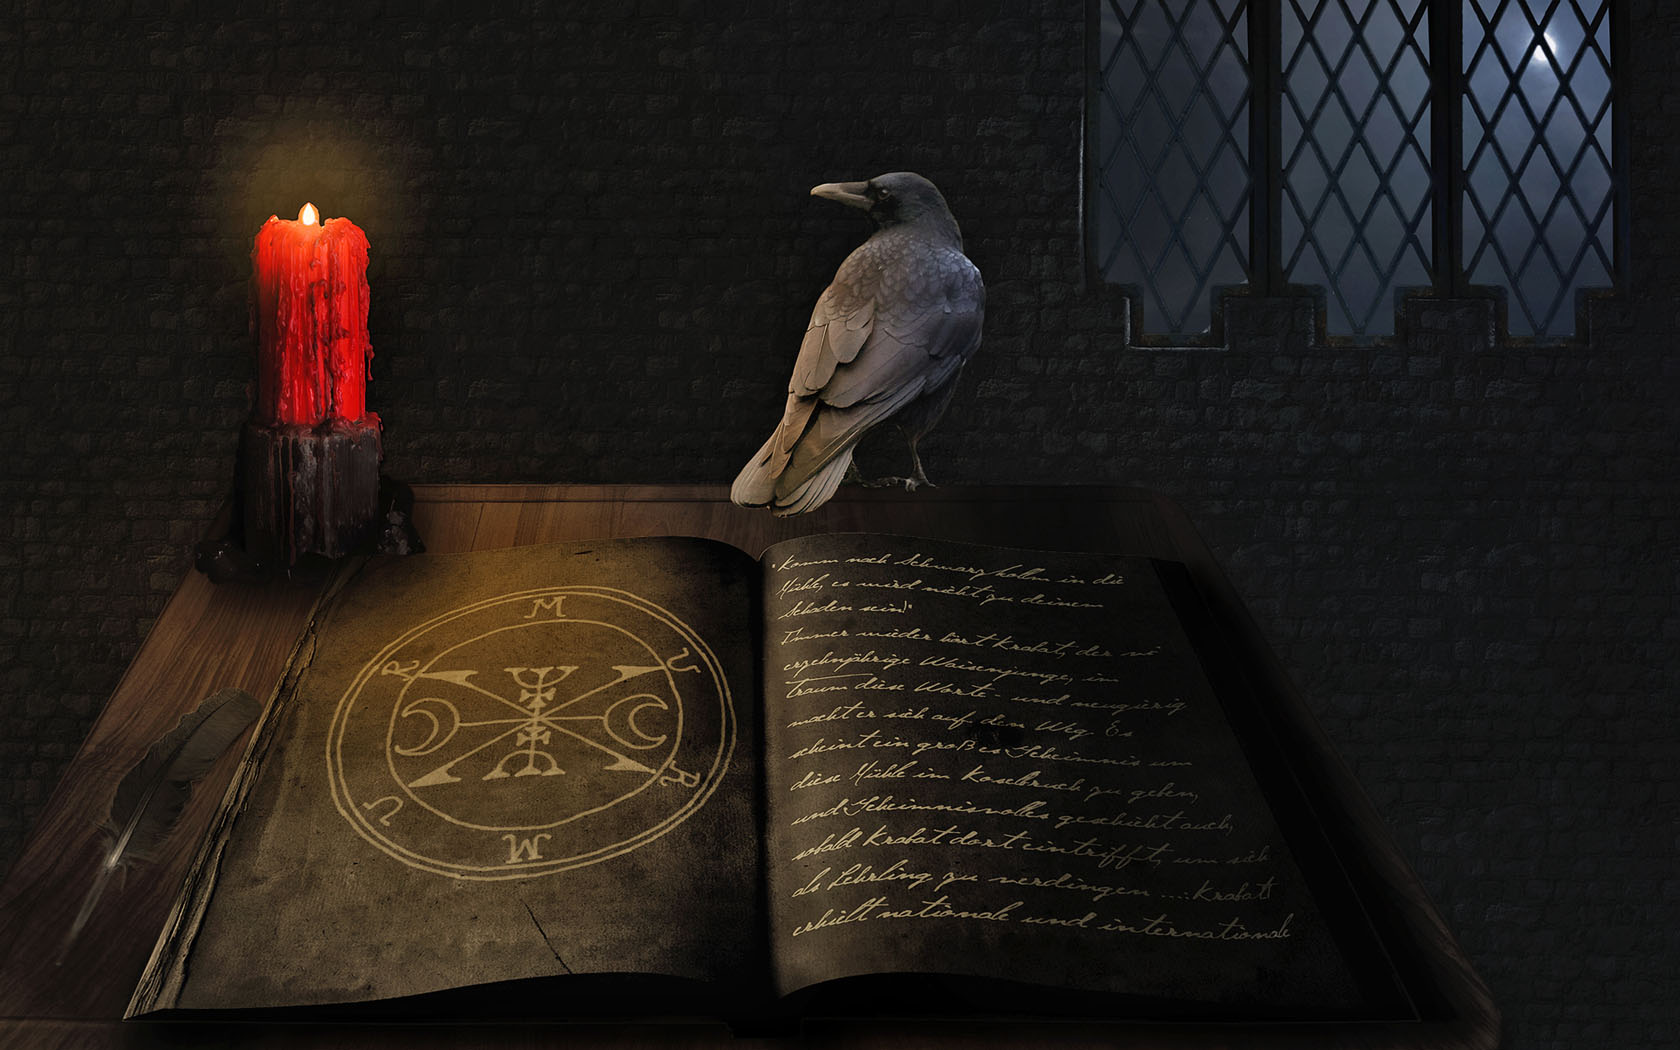 Dark Occult HD Wallpaper | Background Image